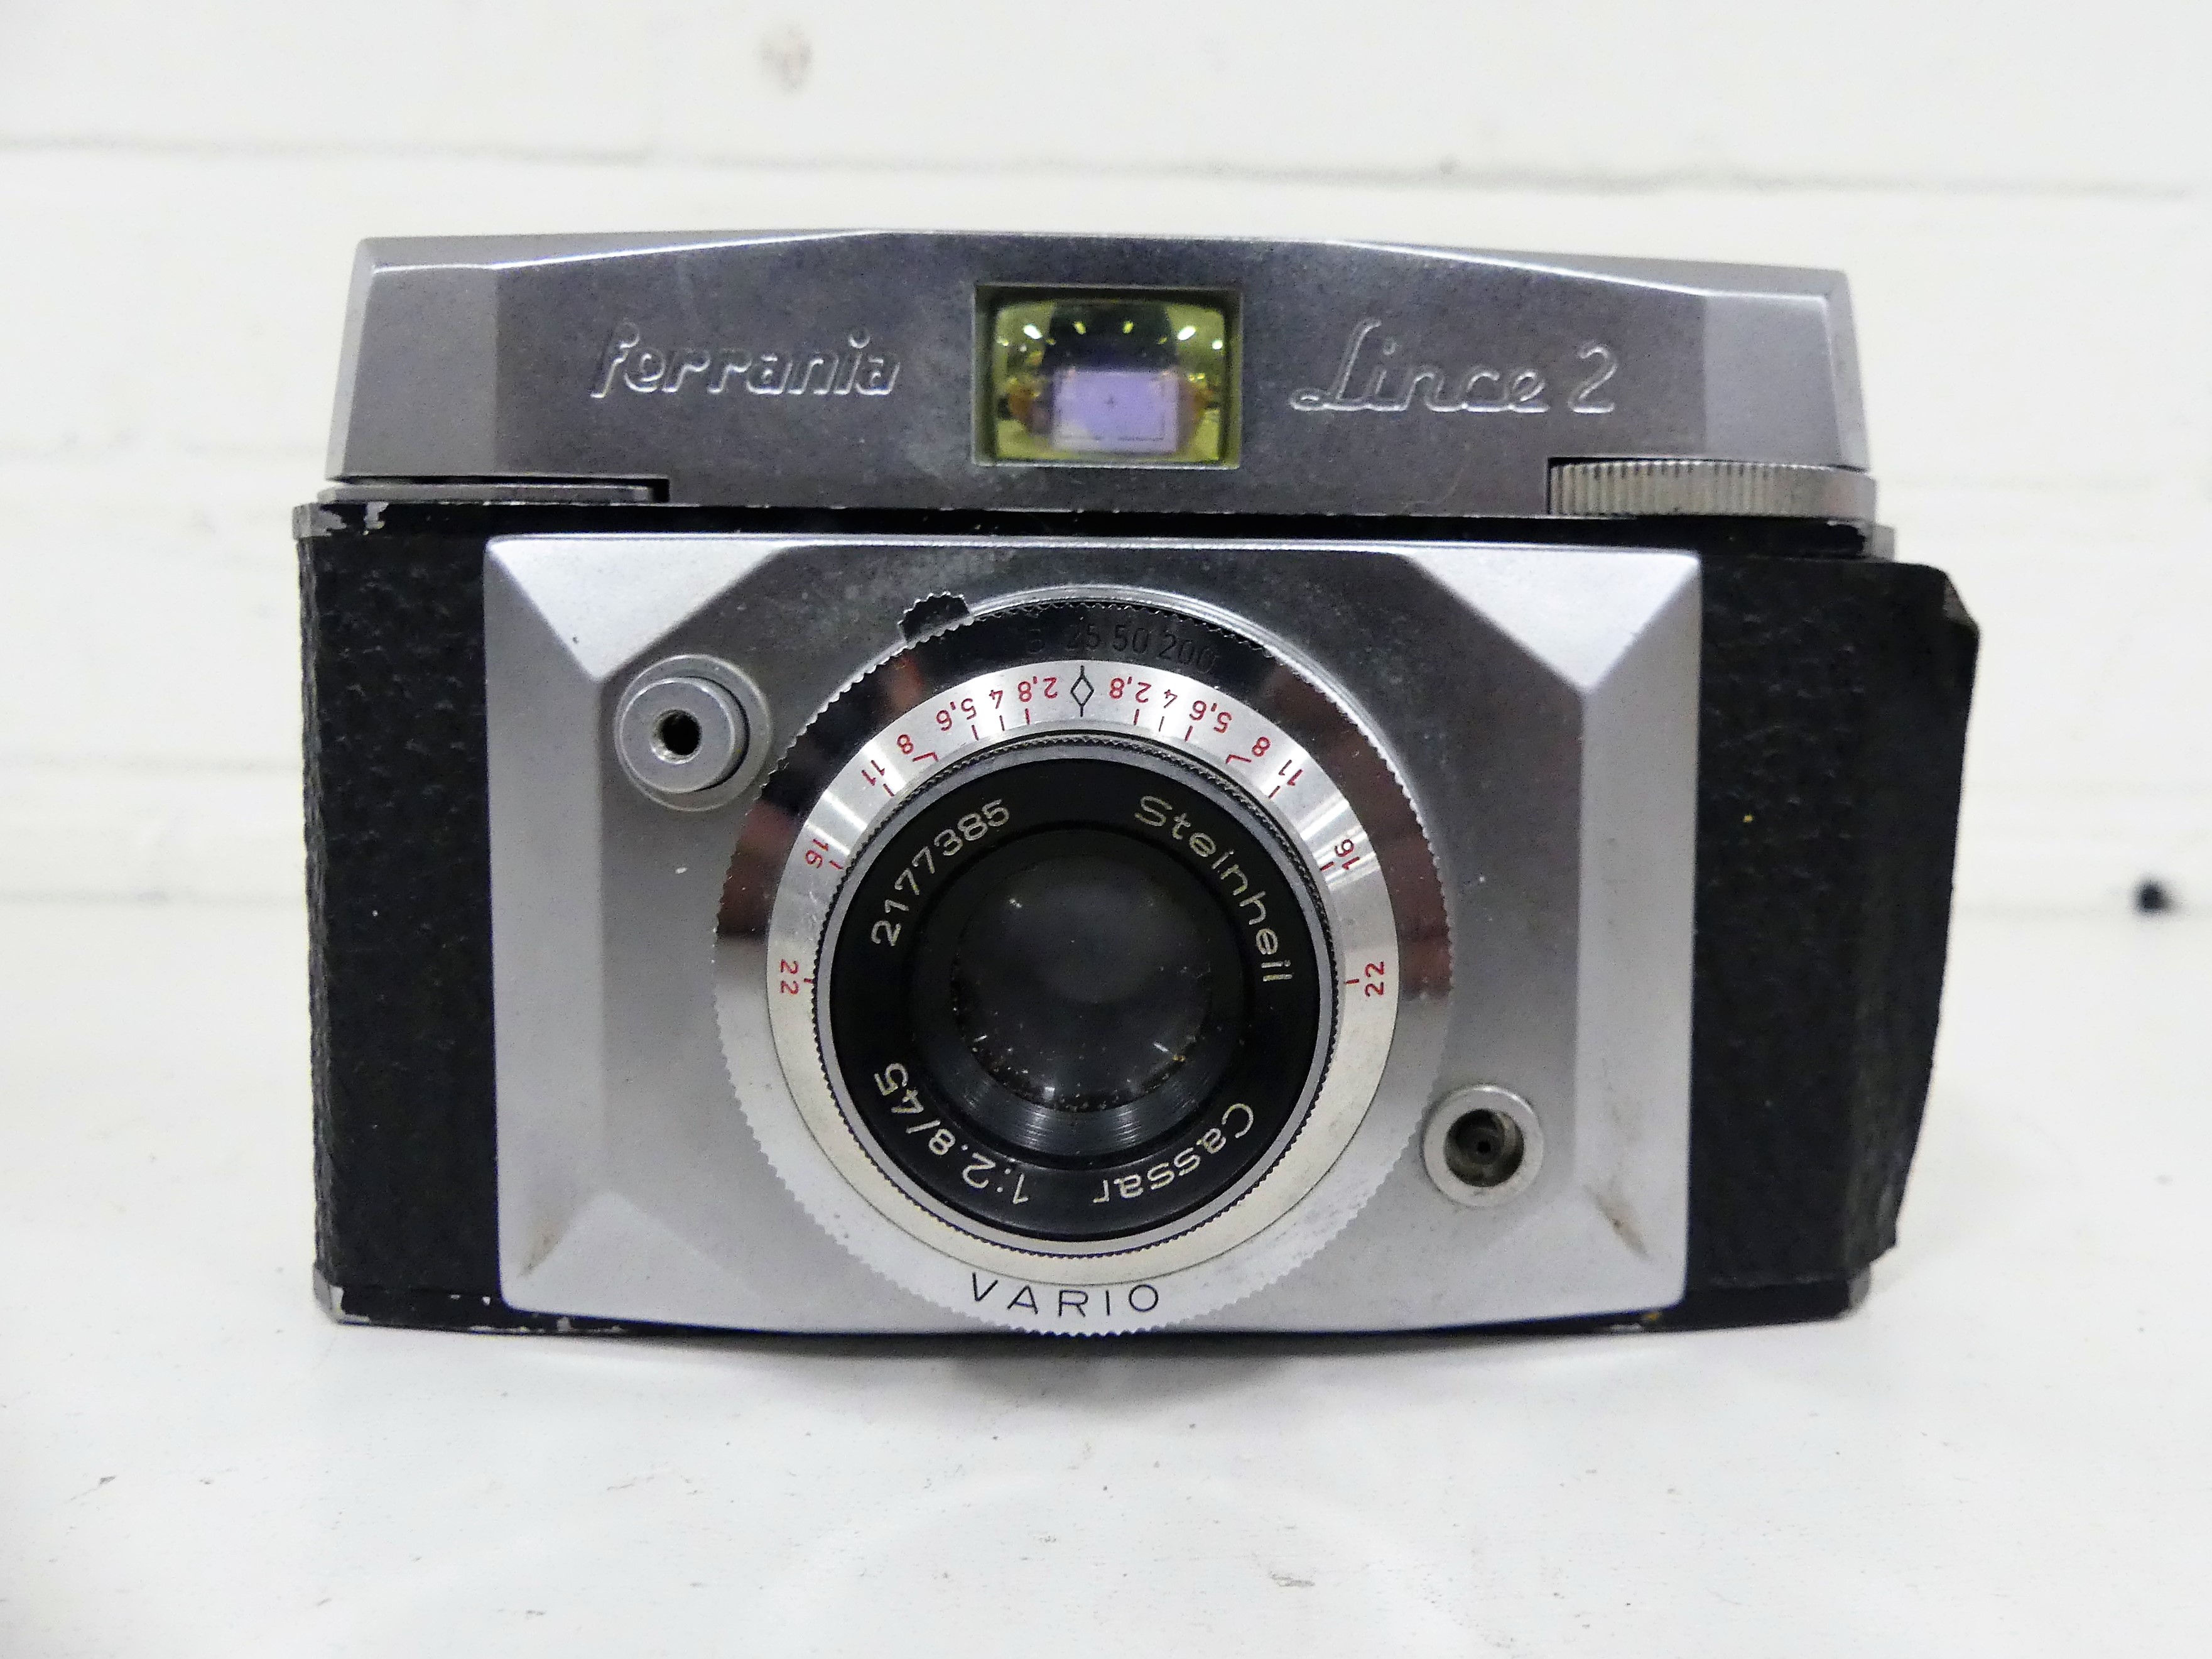 Ferrania vintage camera Lince 2, 1964